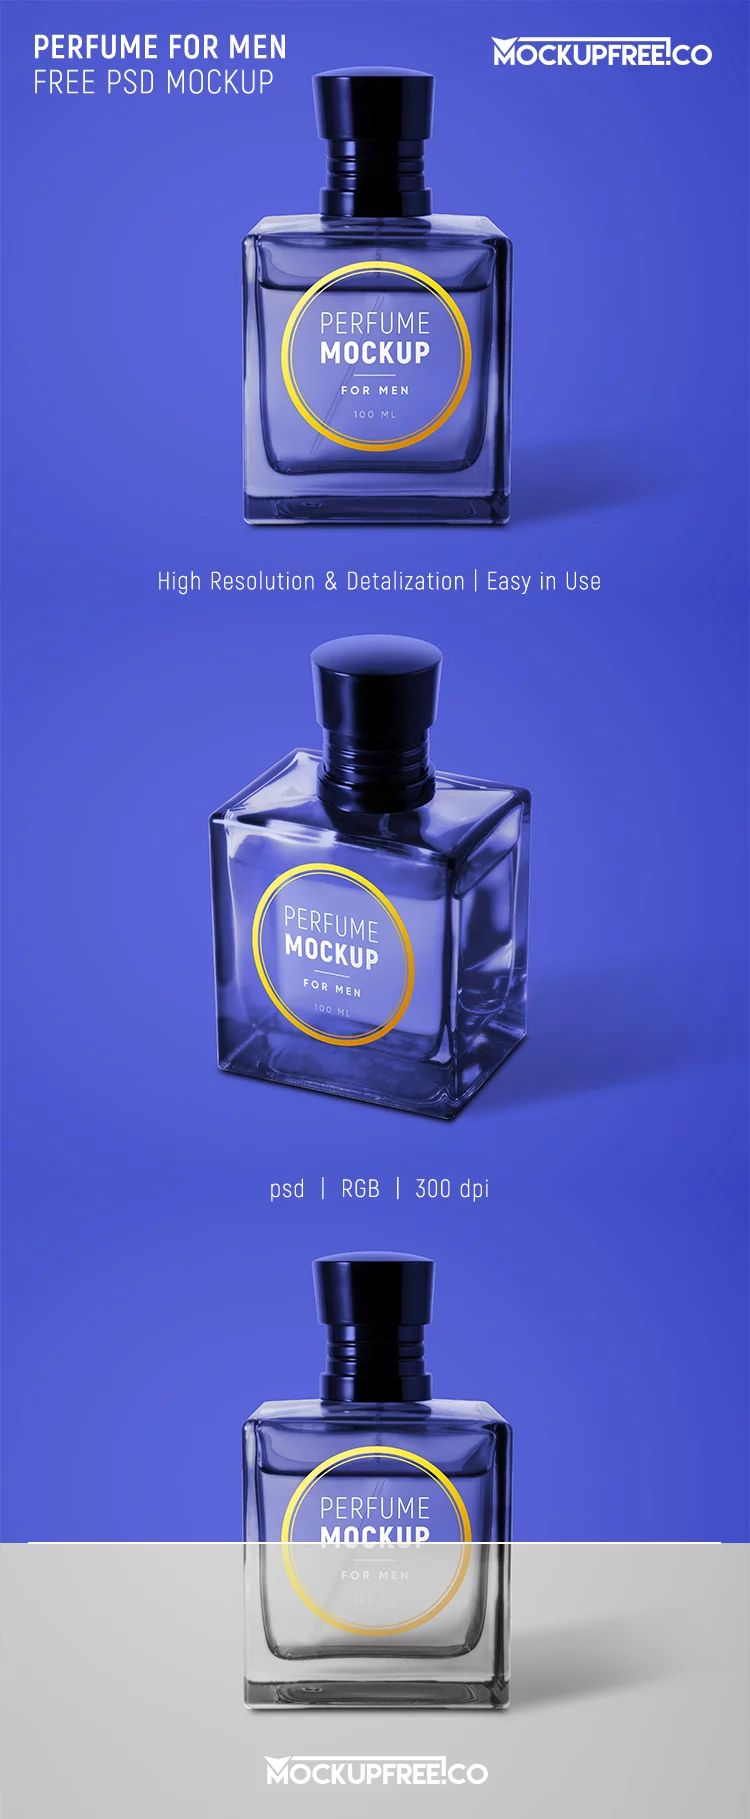 Perfume for Men – Free PSD Mockup